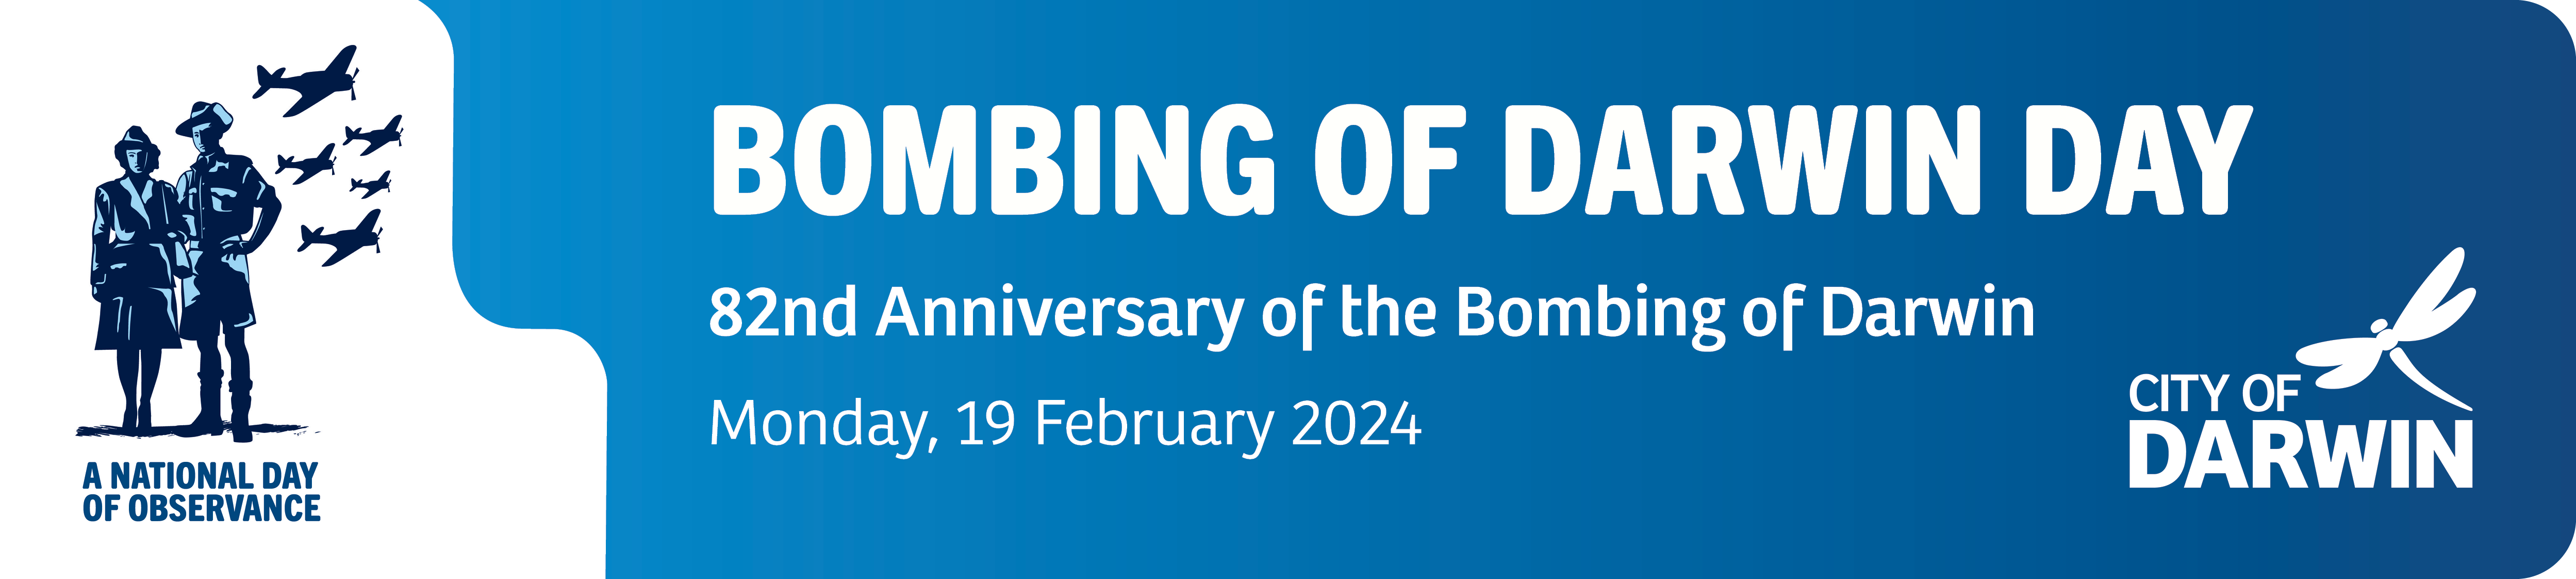 Bombing of Darwin Day 2024